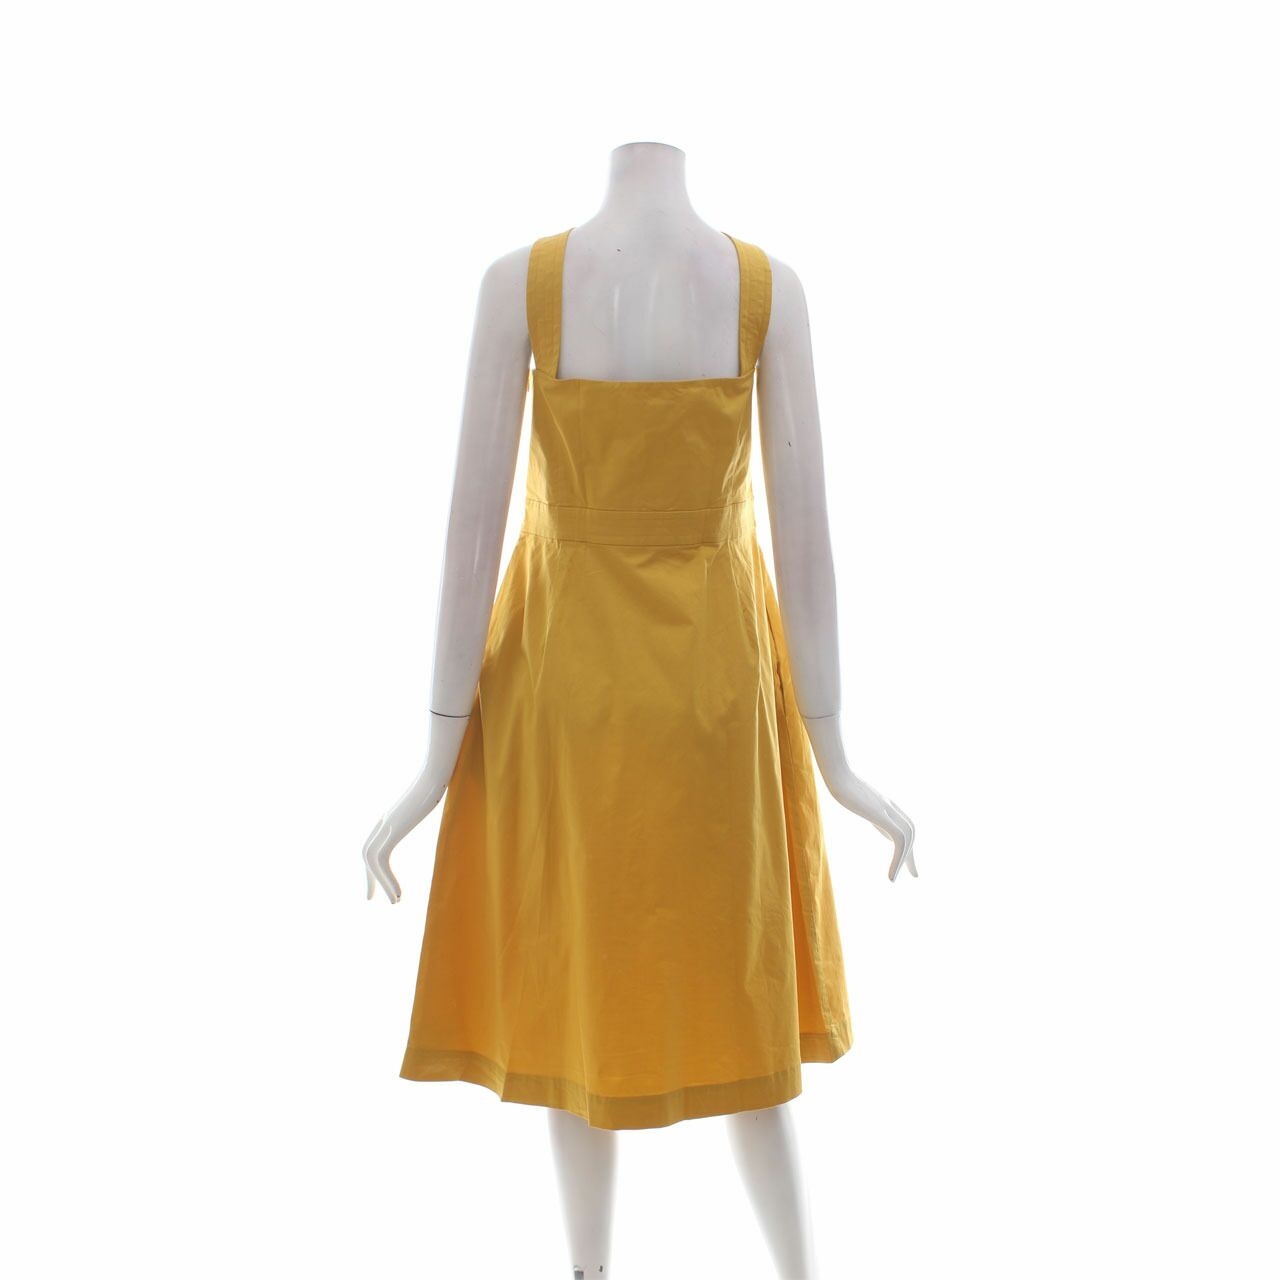 Veronika Maine Mustard Midi Dress